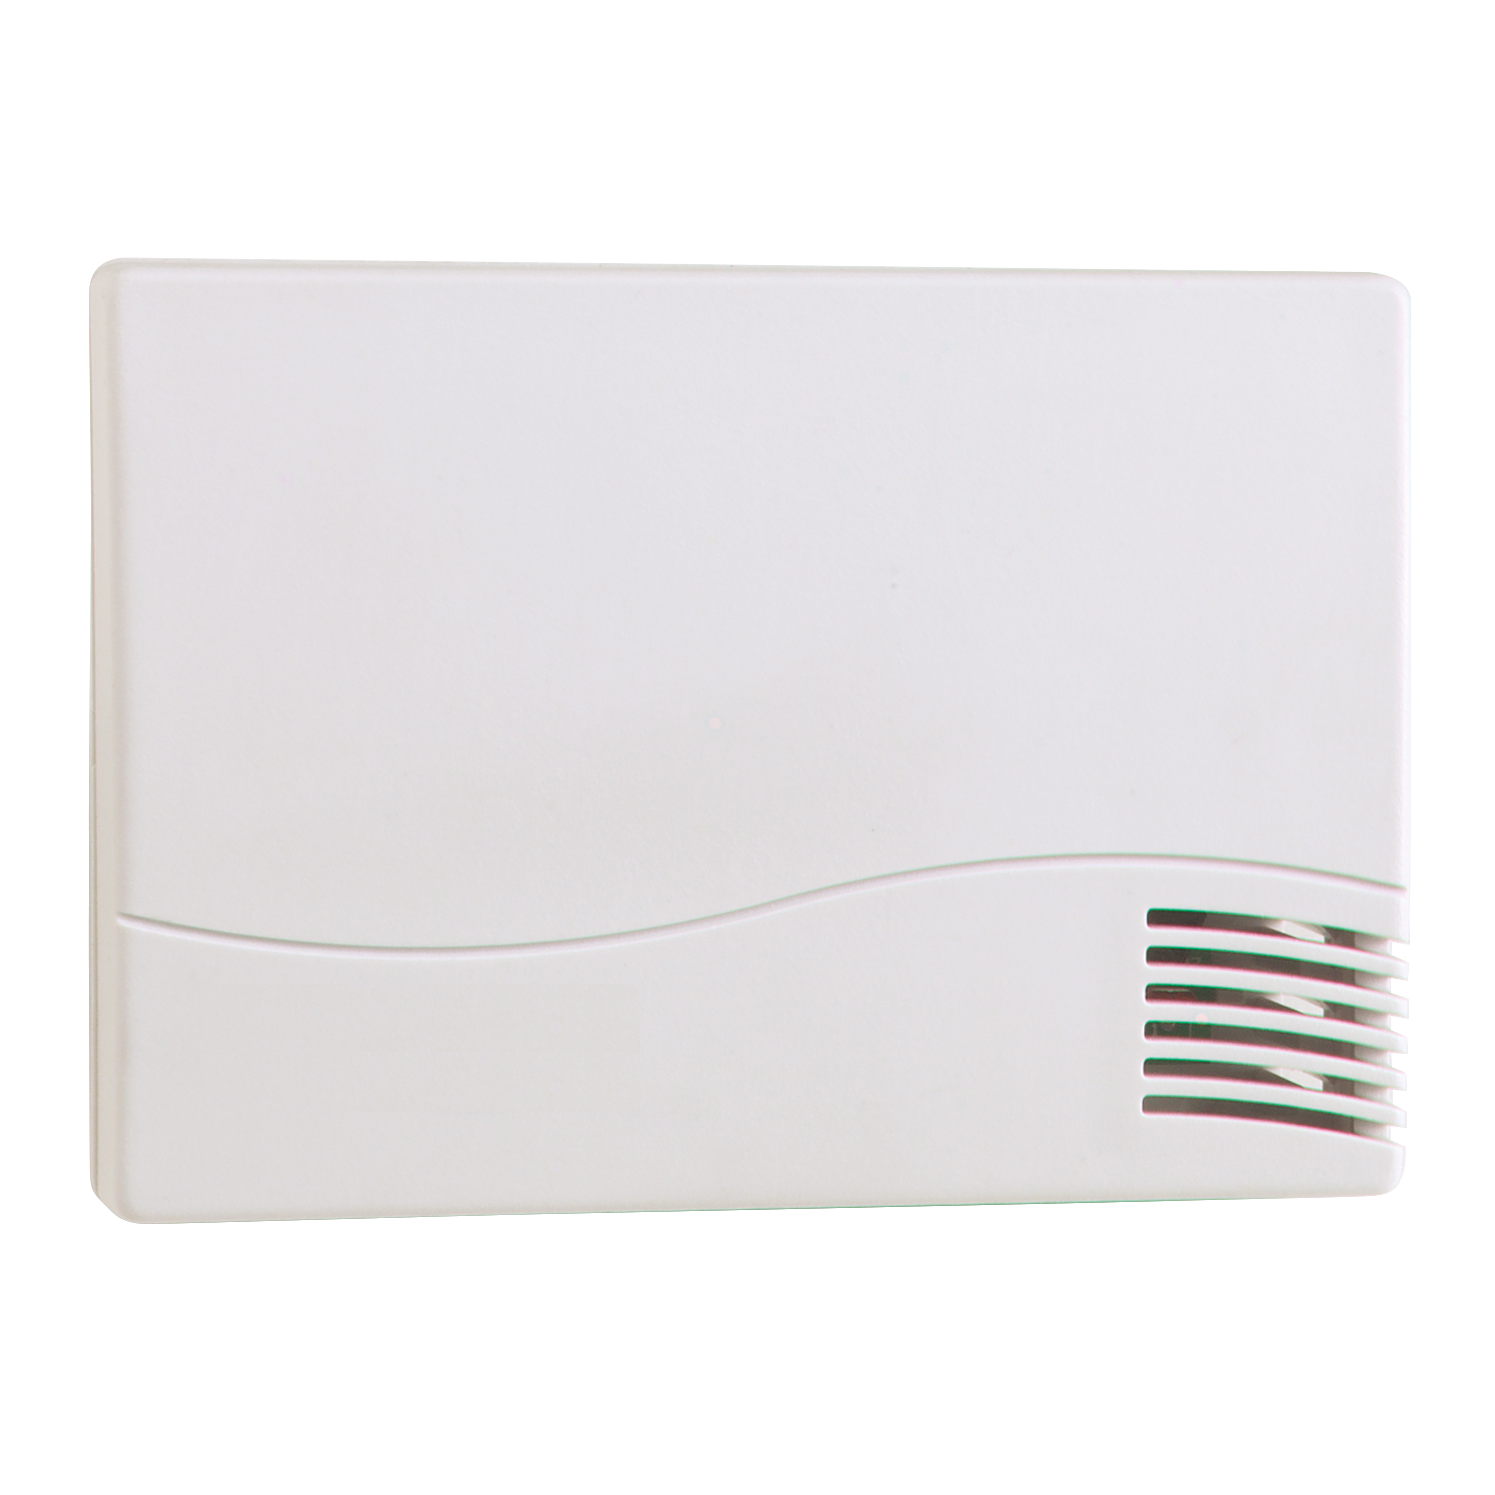 Anden-Model-8082-Relative Humidity-Sensor